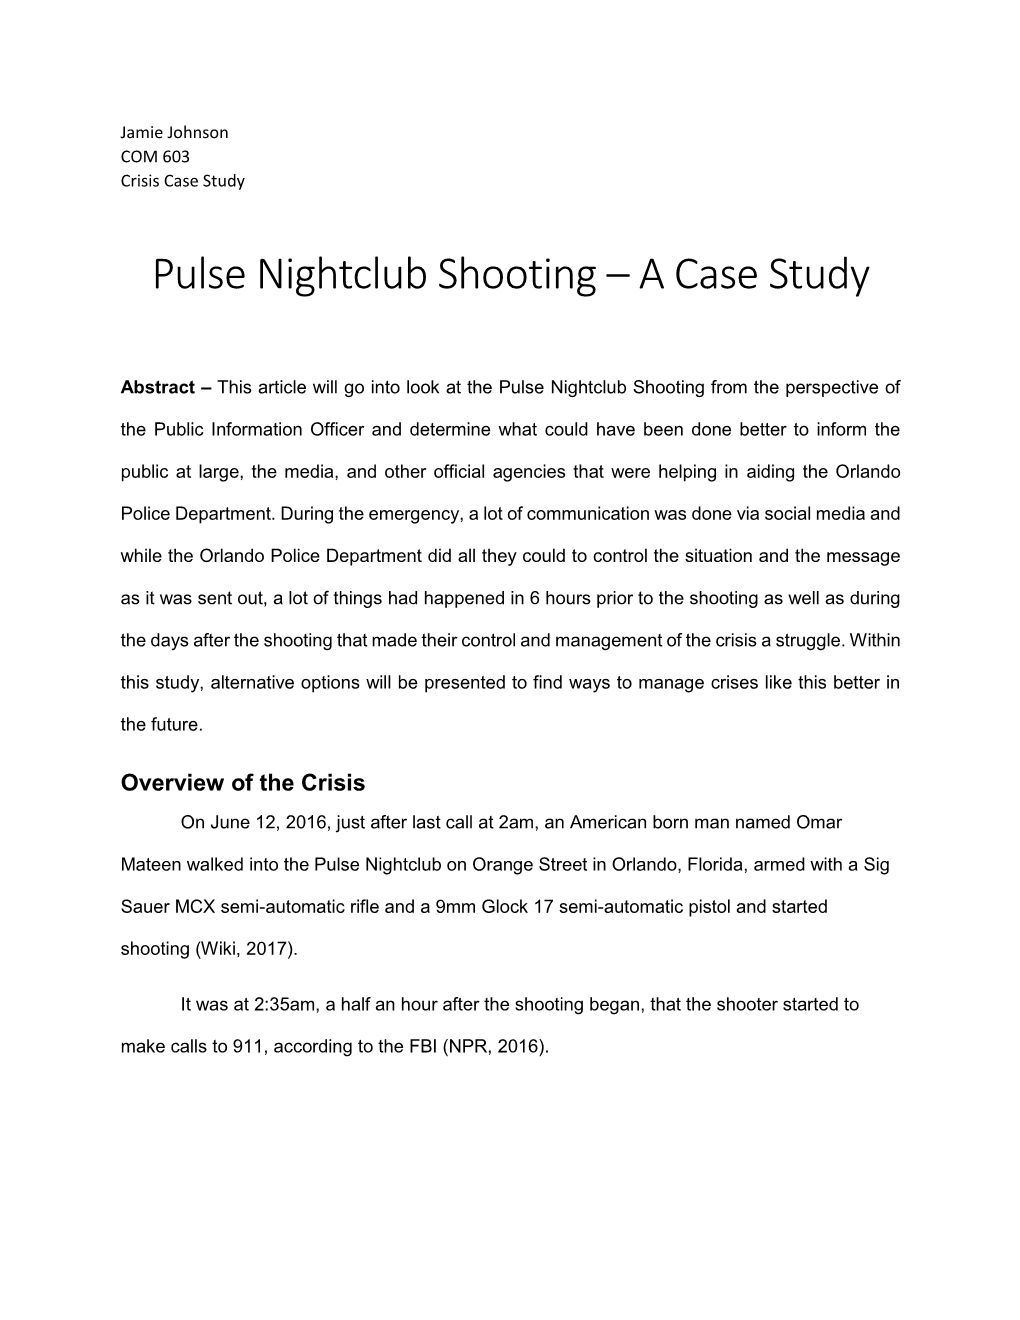 Pulse Nightclub Shooting – a Case Study